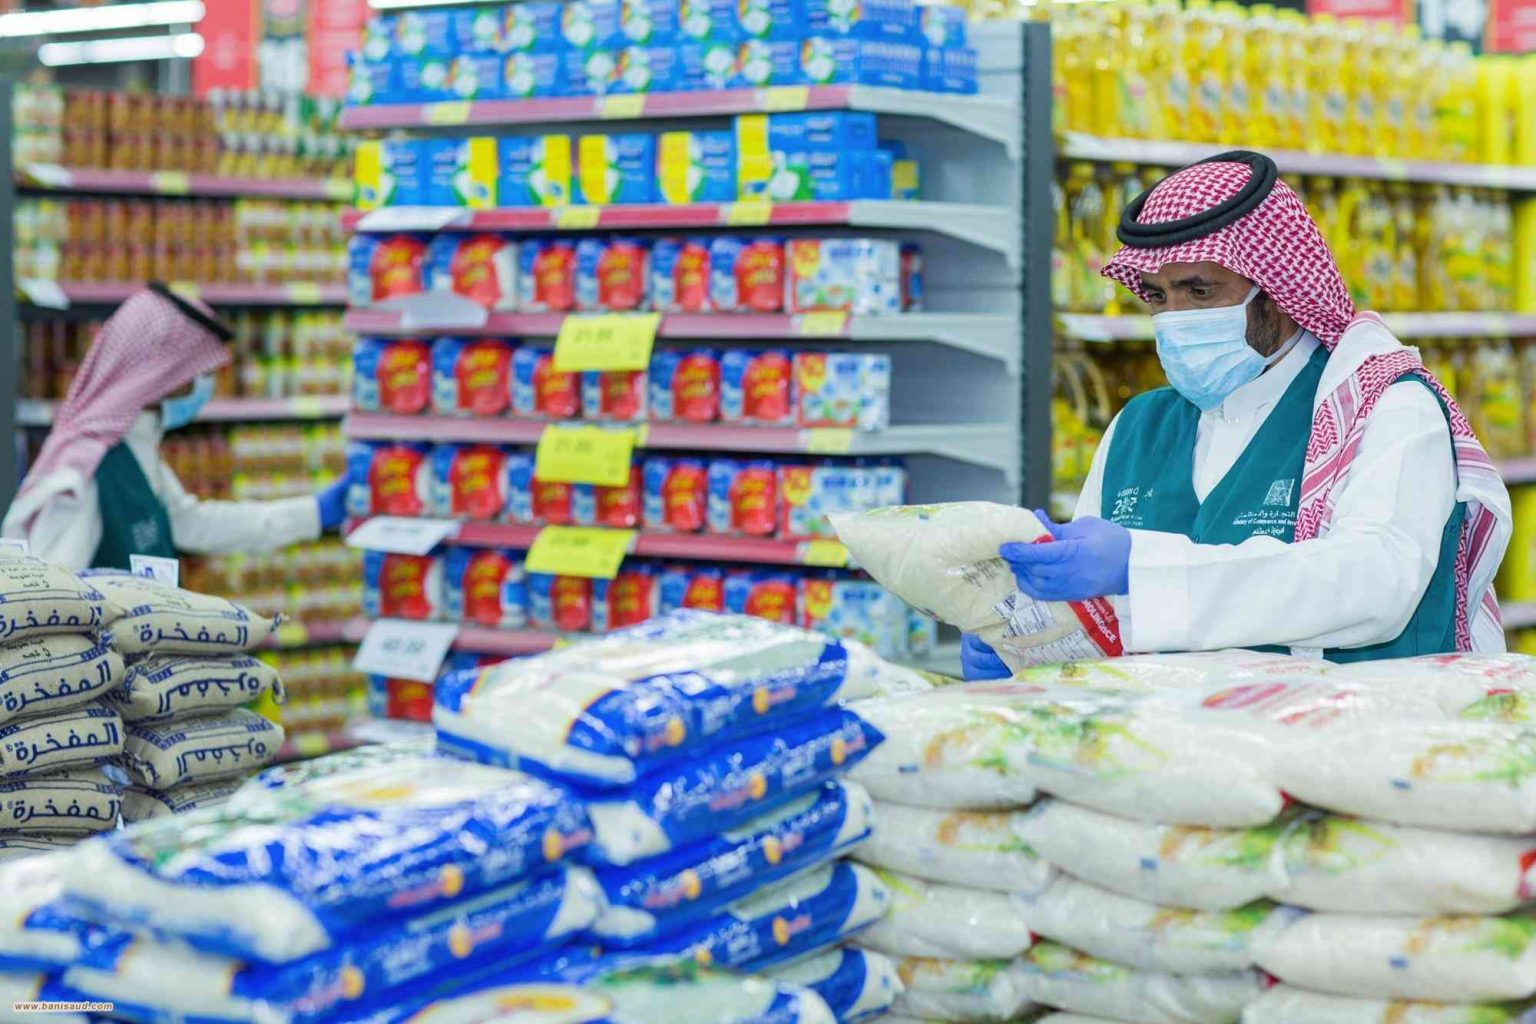 Inflation in Saudi Arabia